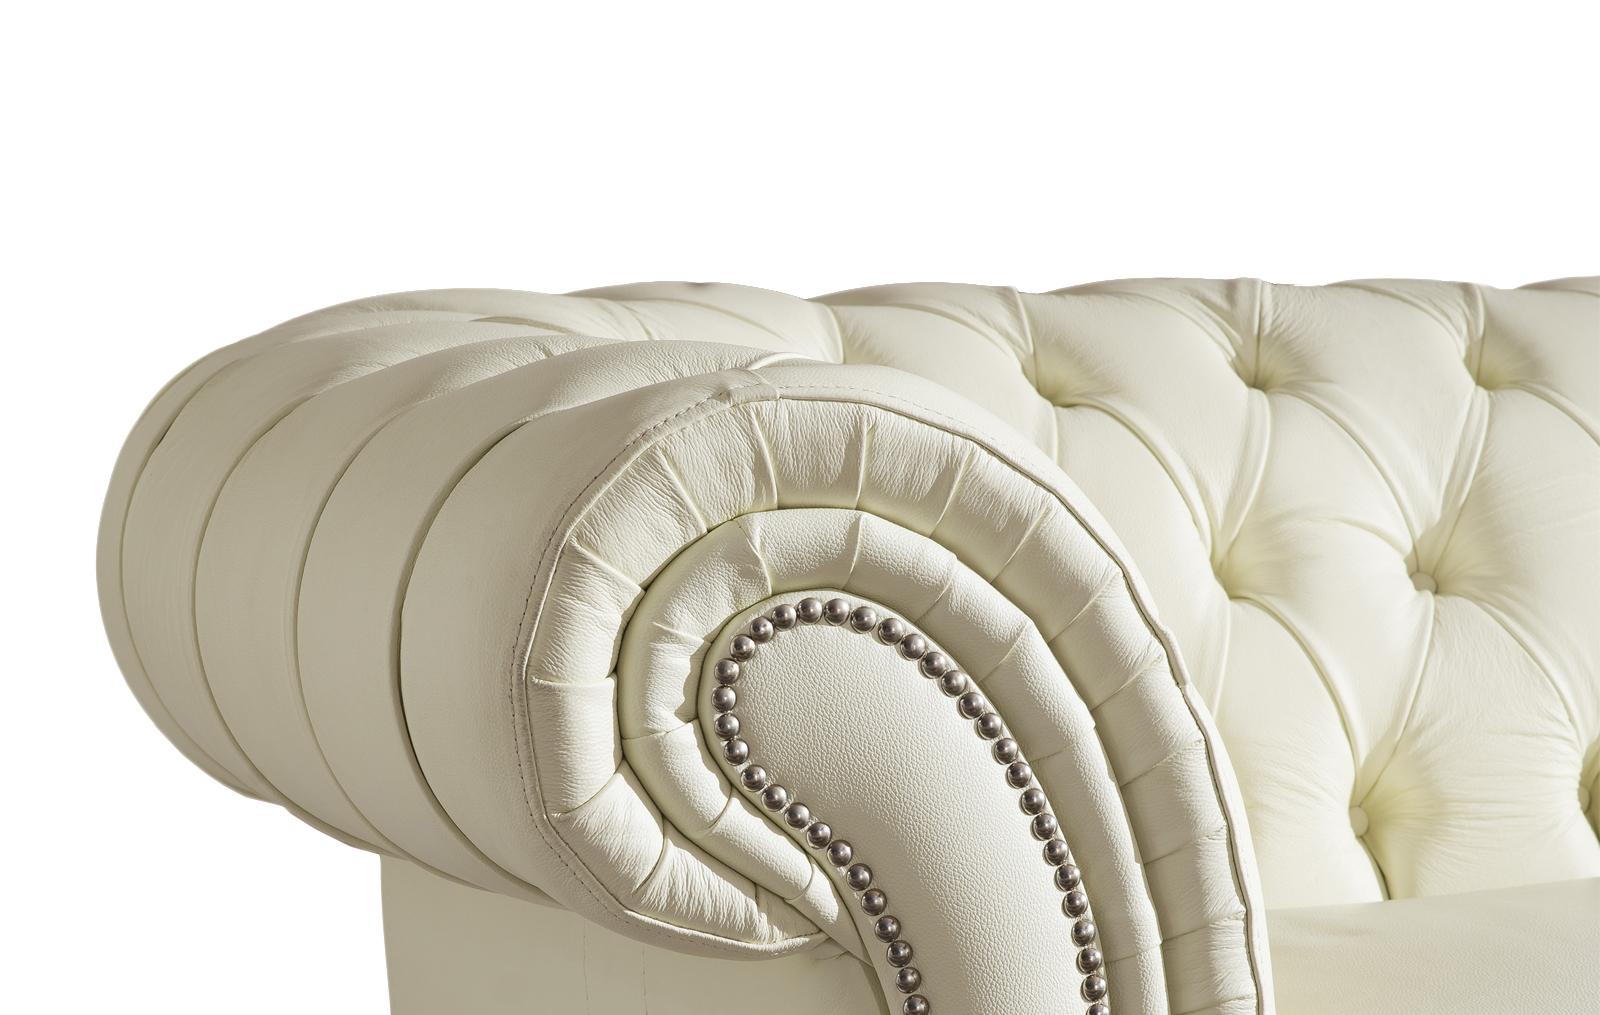 

    
Beige Top-grain Leather Sofa  Contemporary ESF 287
